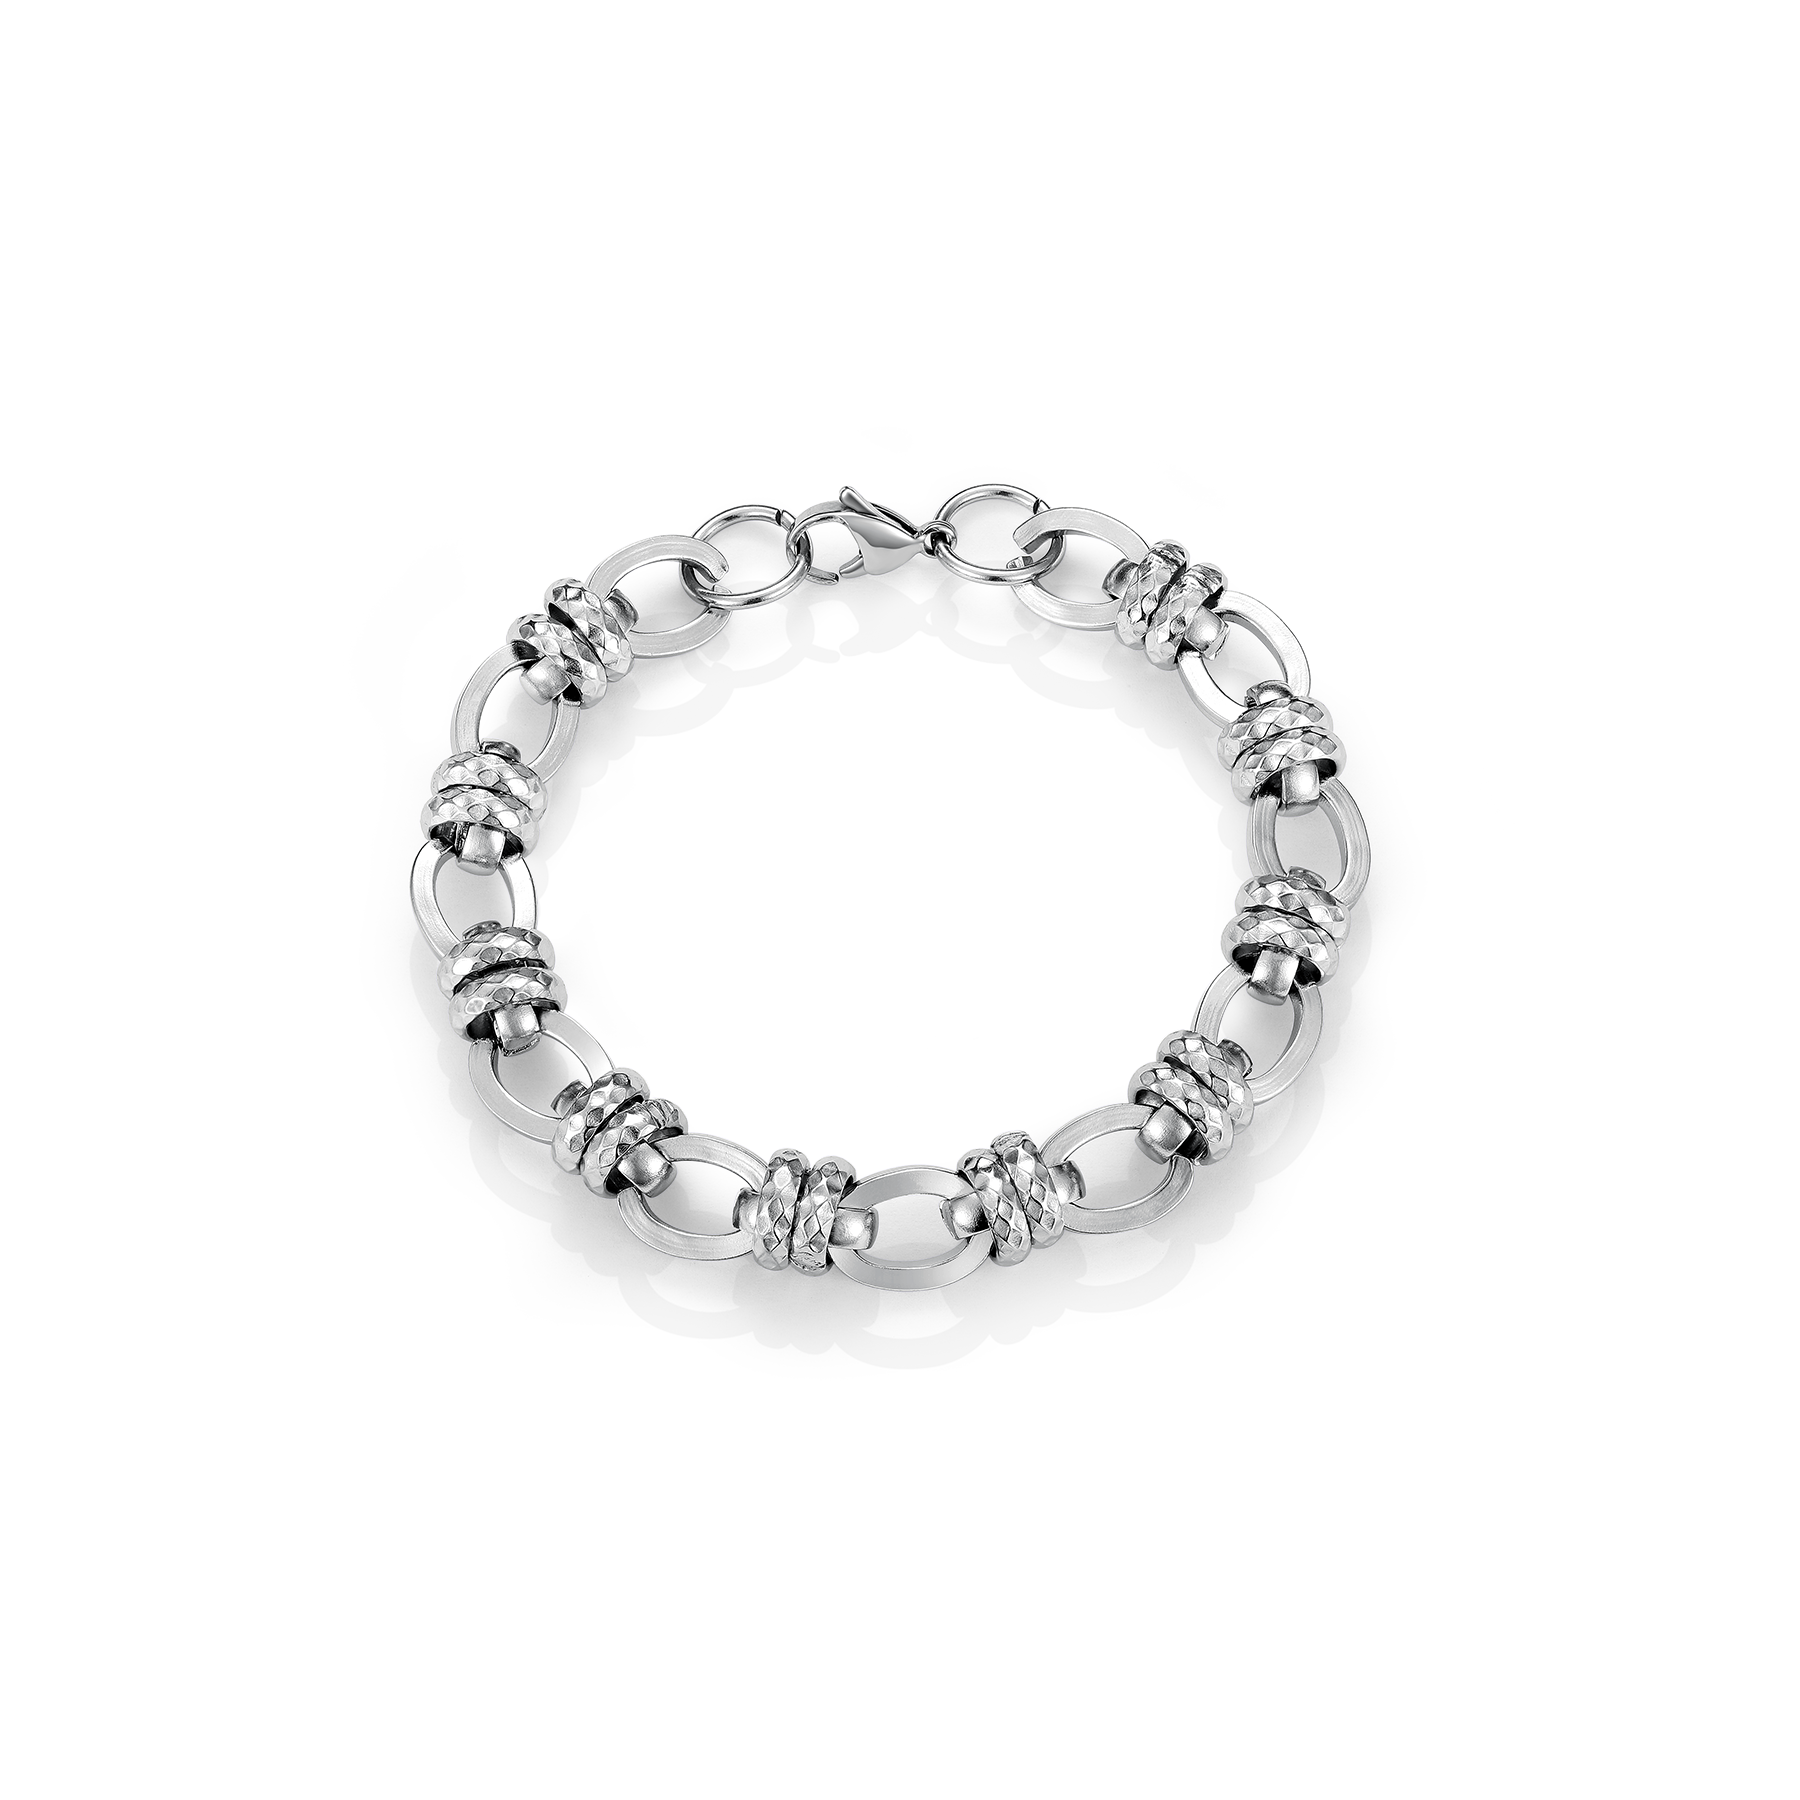 Silver rhombille cut ring design chain bracelet for women